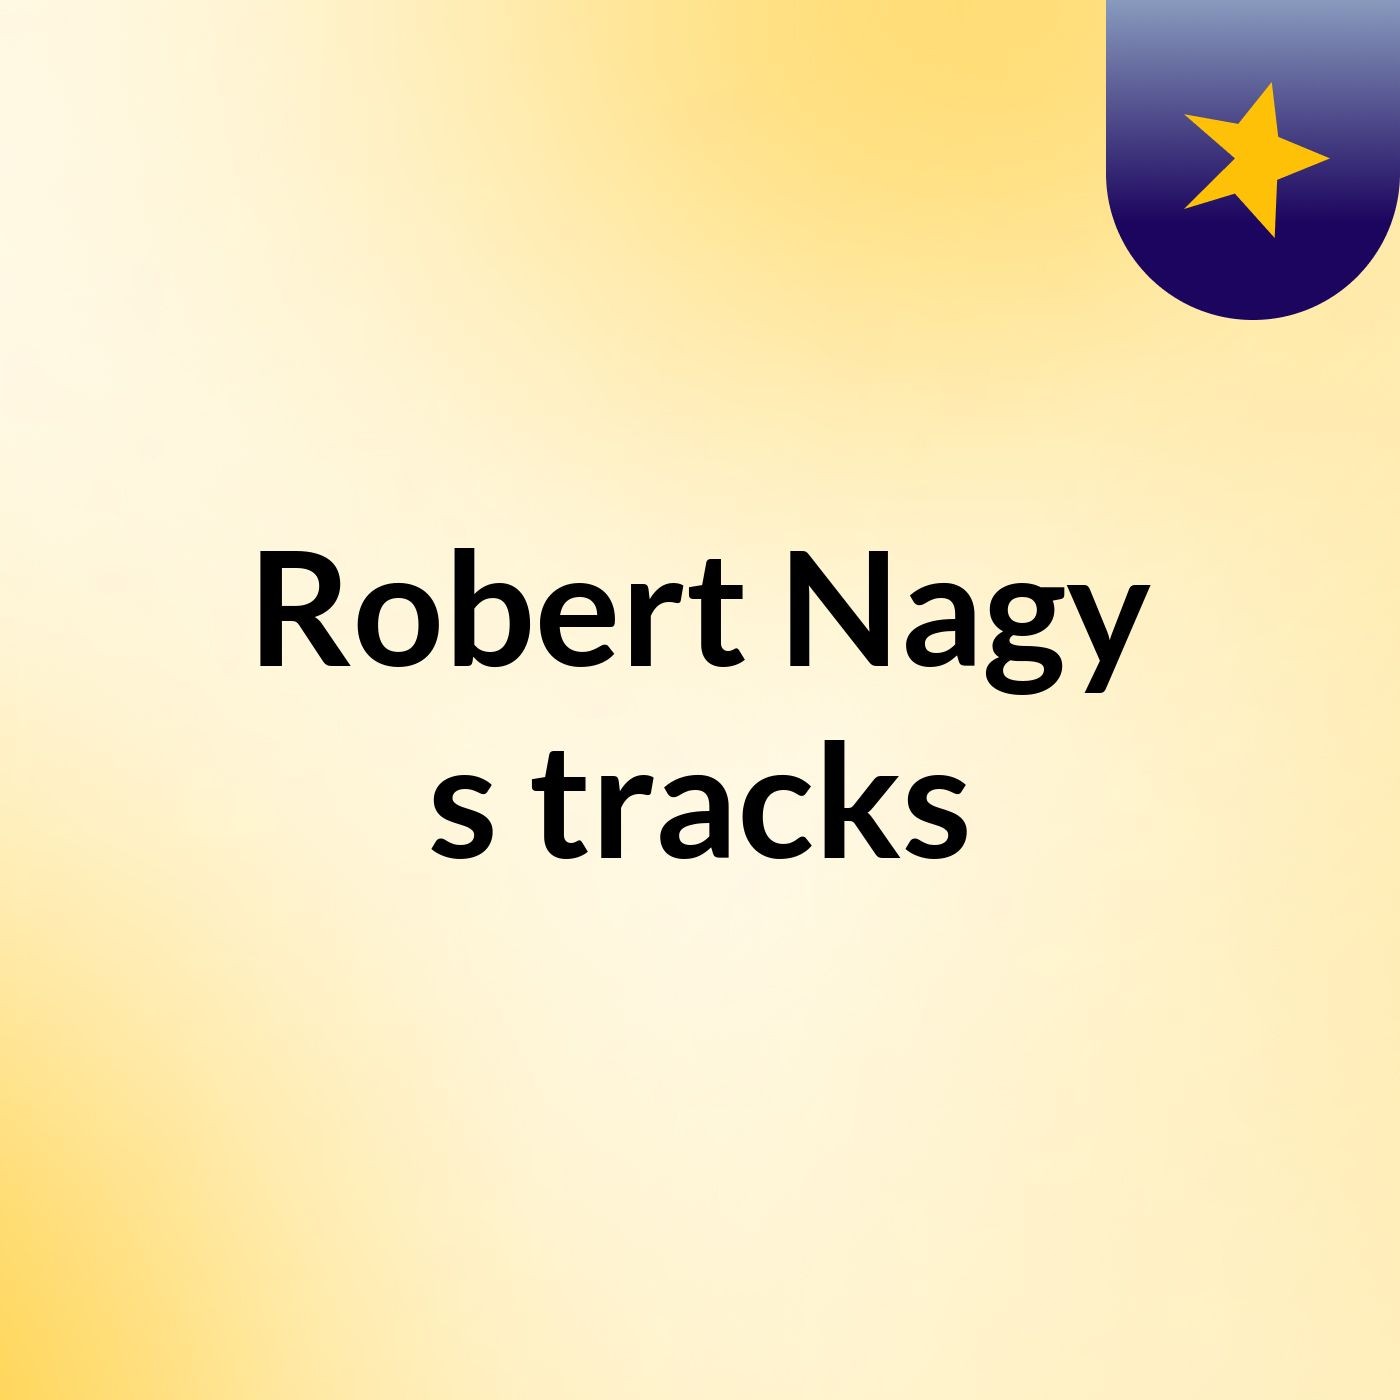 Robert Nagy's tracks